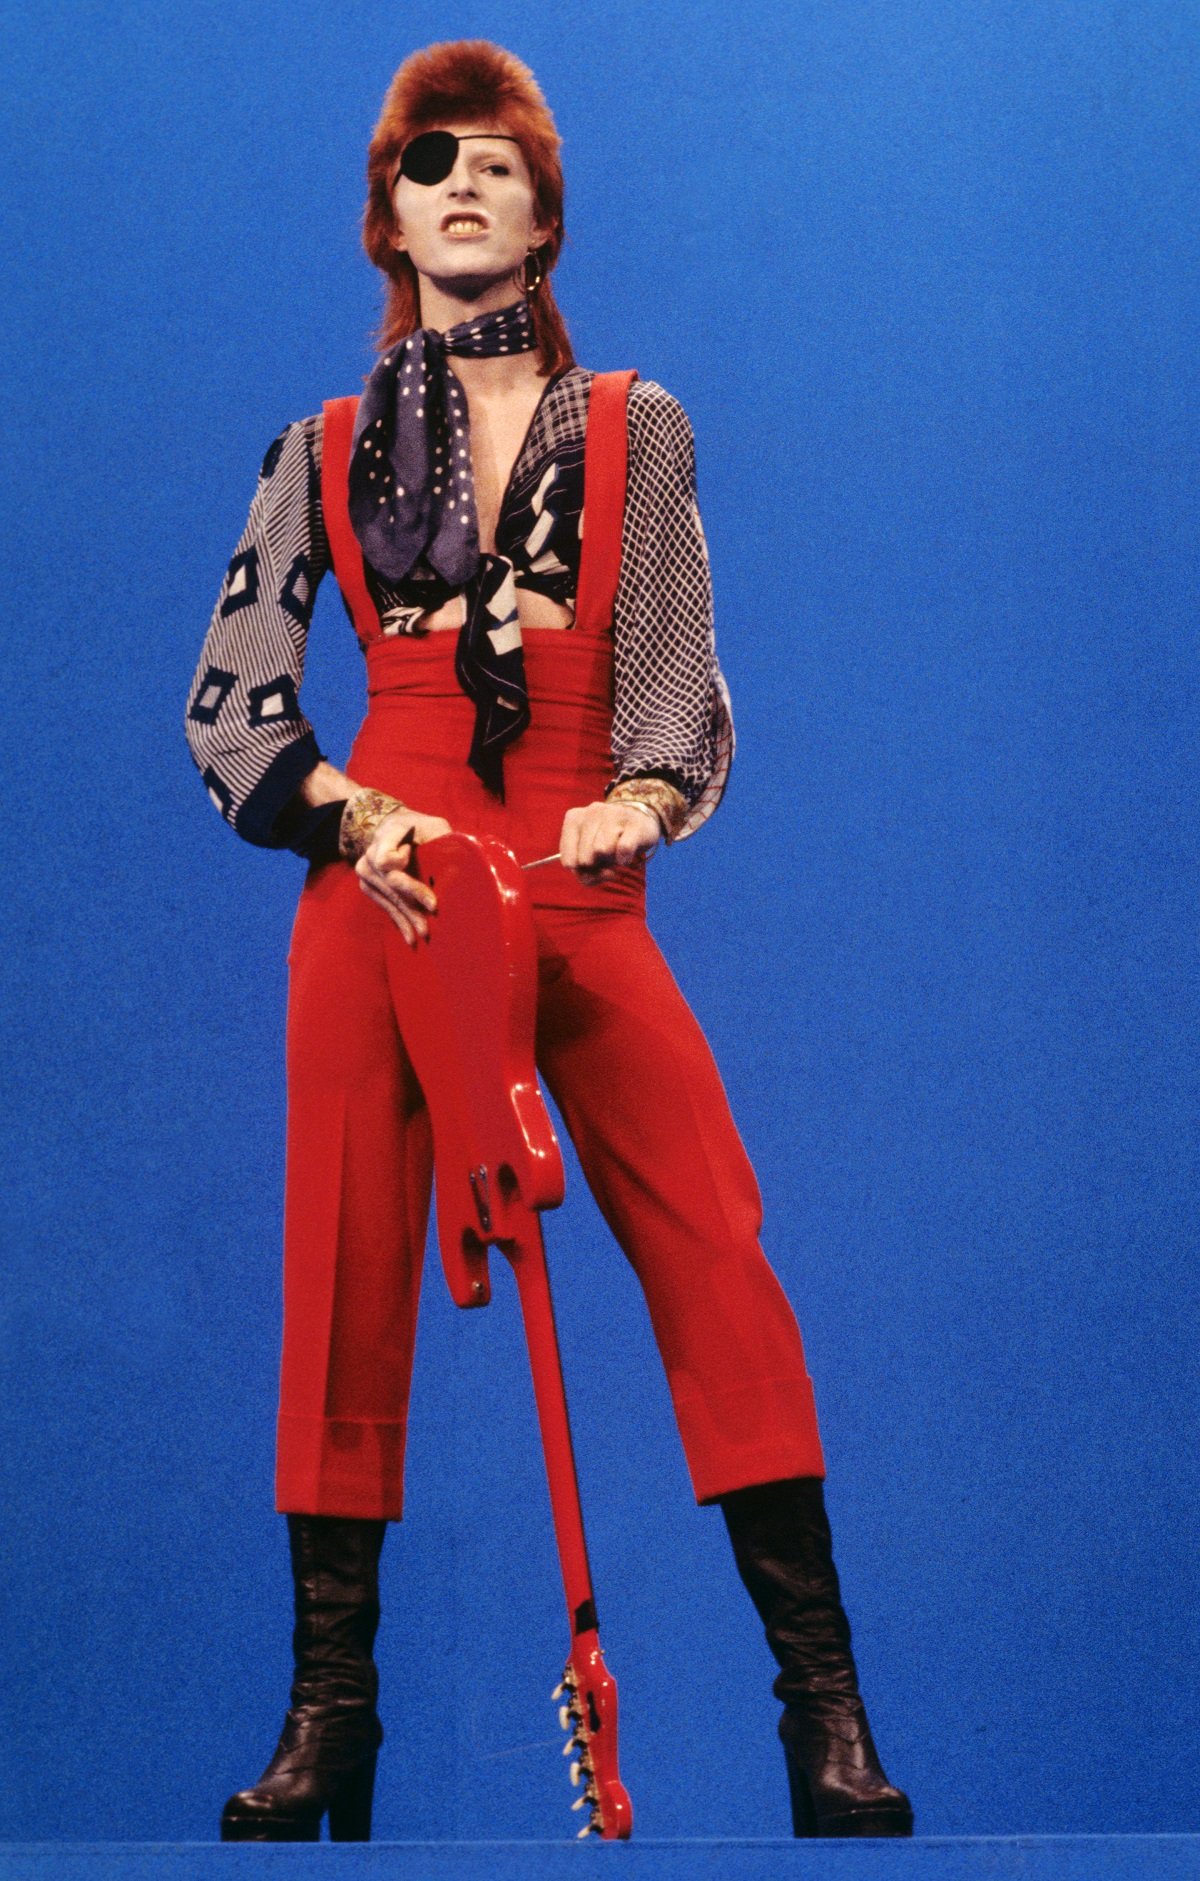 David Bowie wearing an eyepatch performing Rebel Rebel on TopPop in 1974